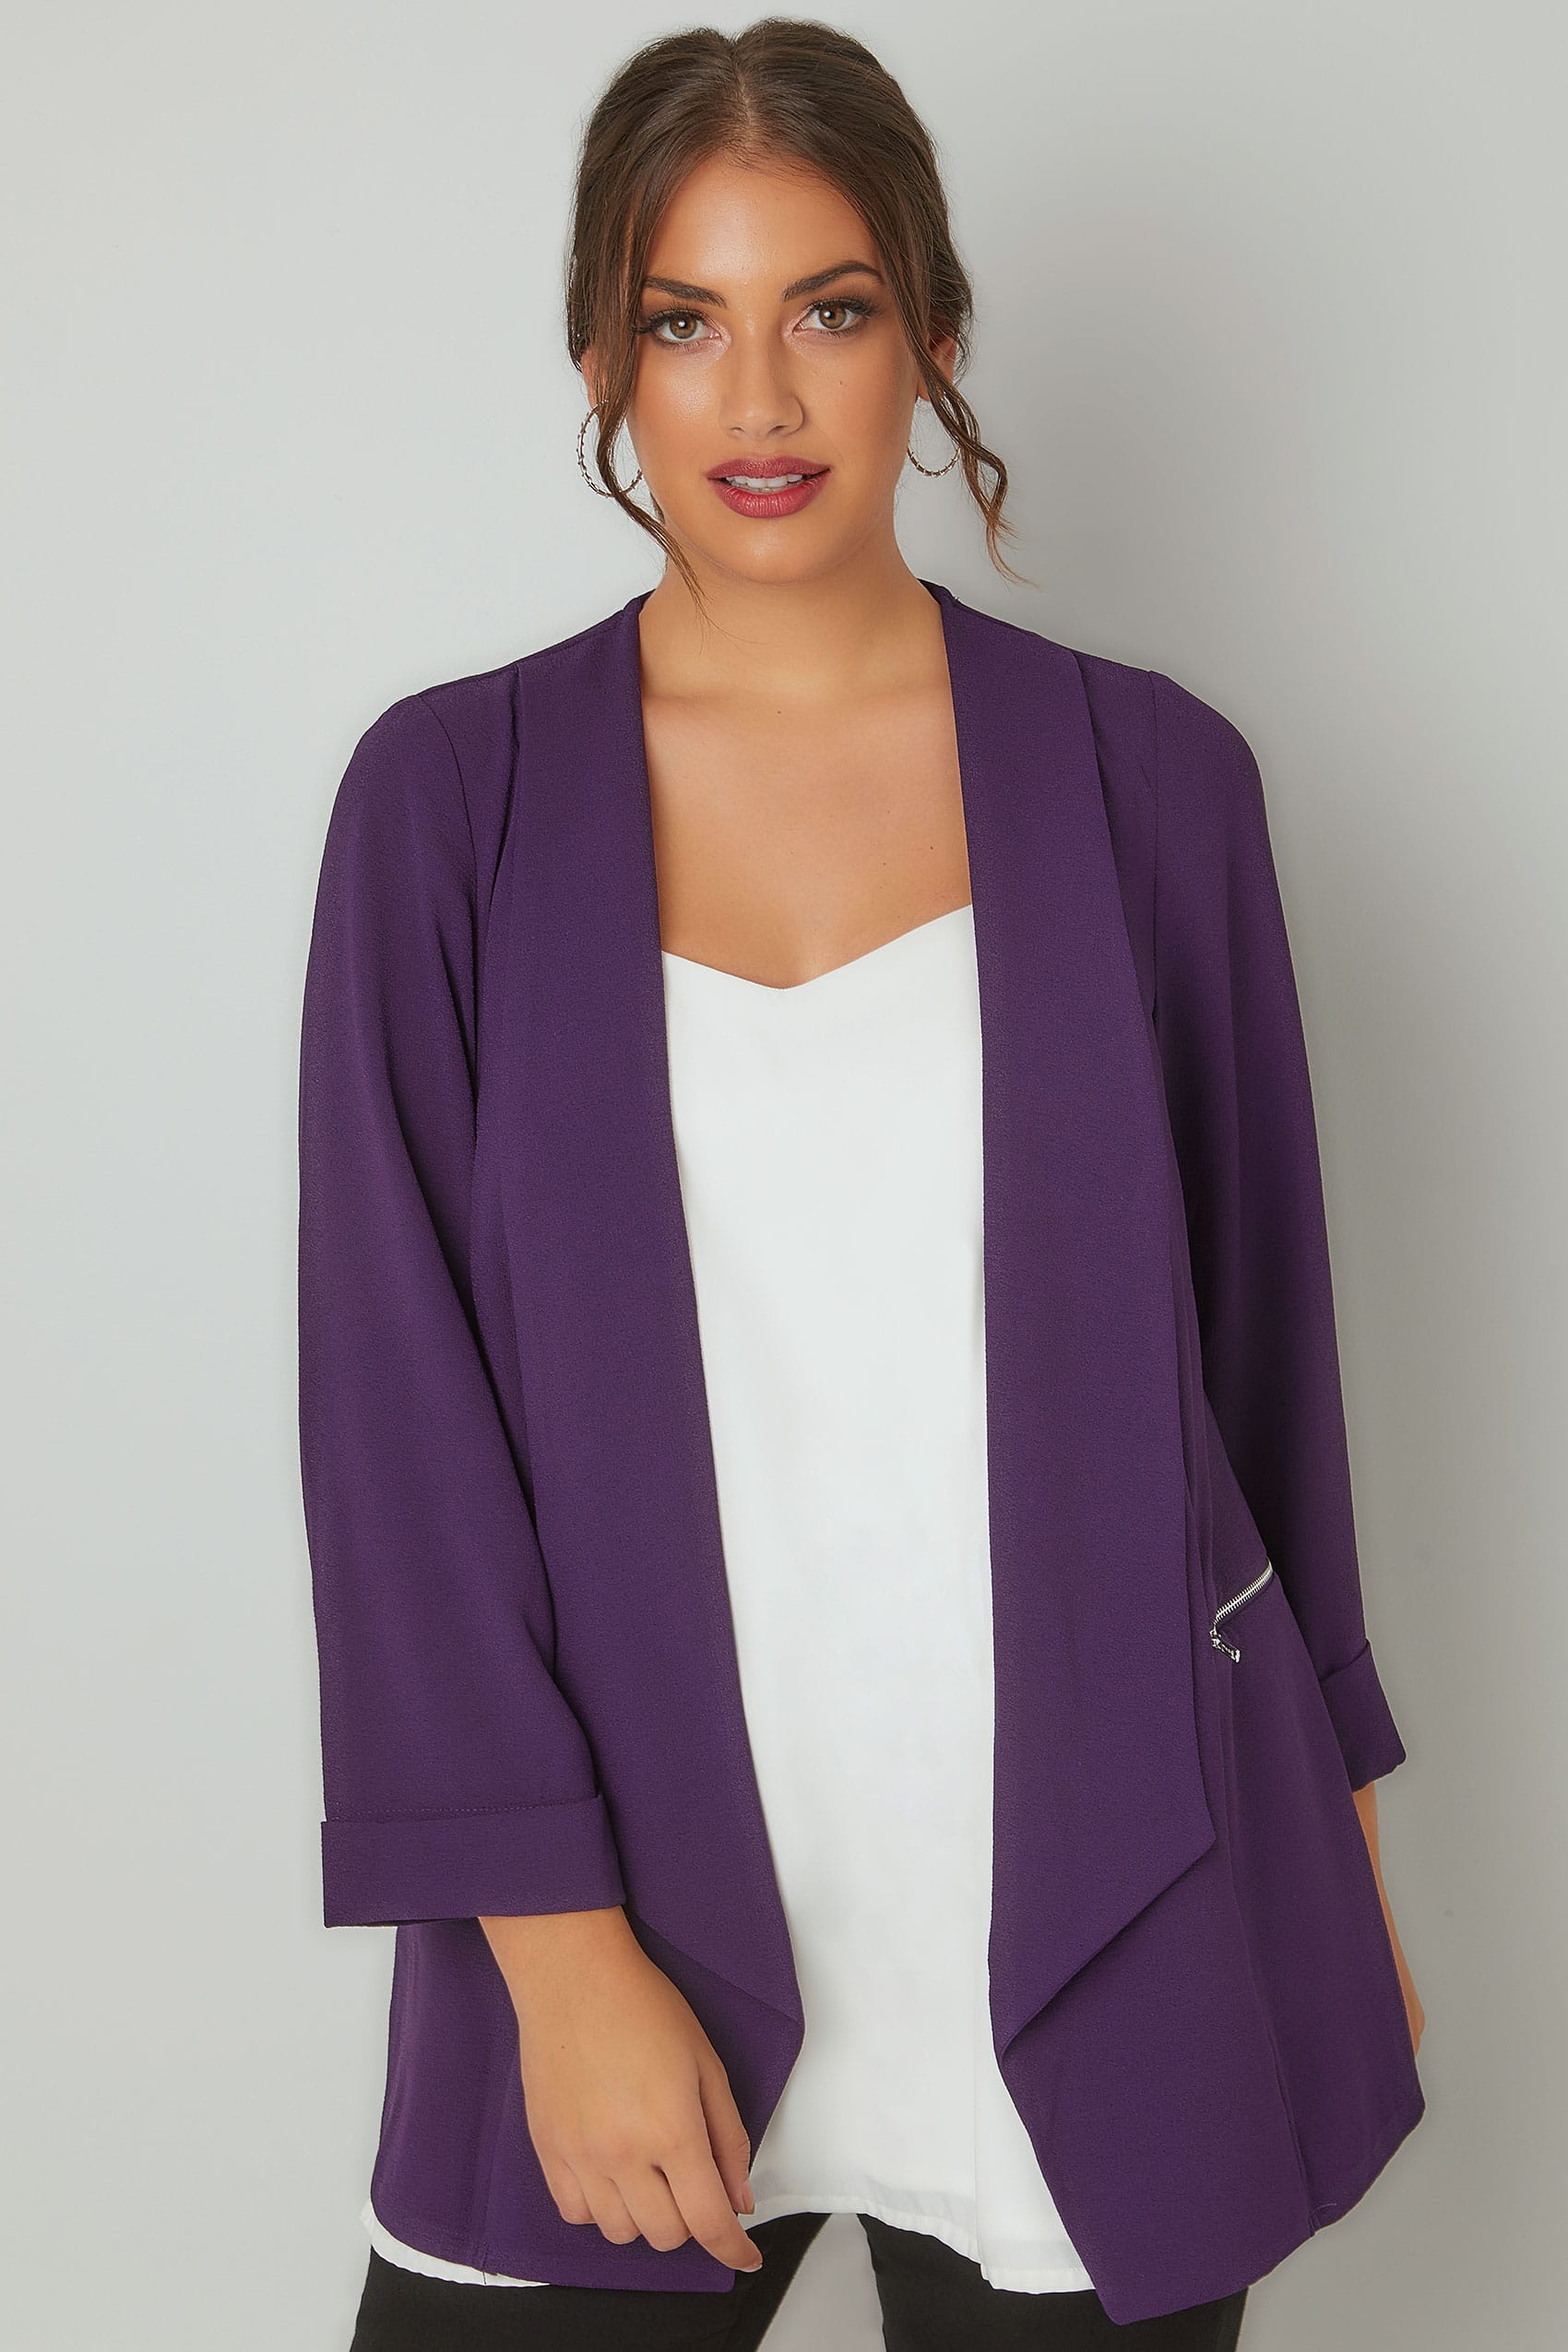 Dark Purple Bubble Crepe Blazer Jacket With Zip Pockets, Plus size 16 to 36